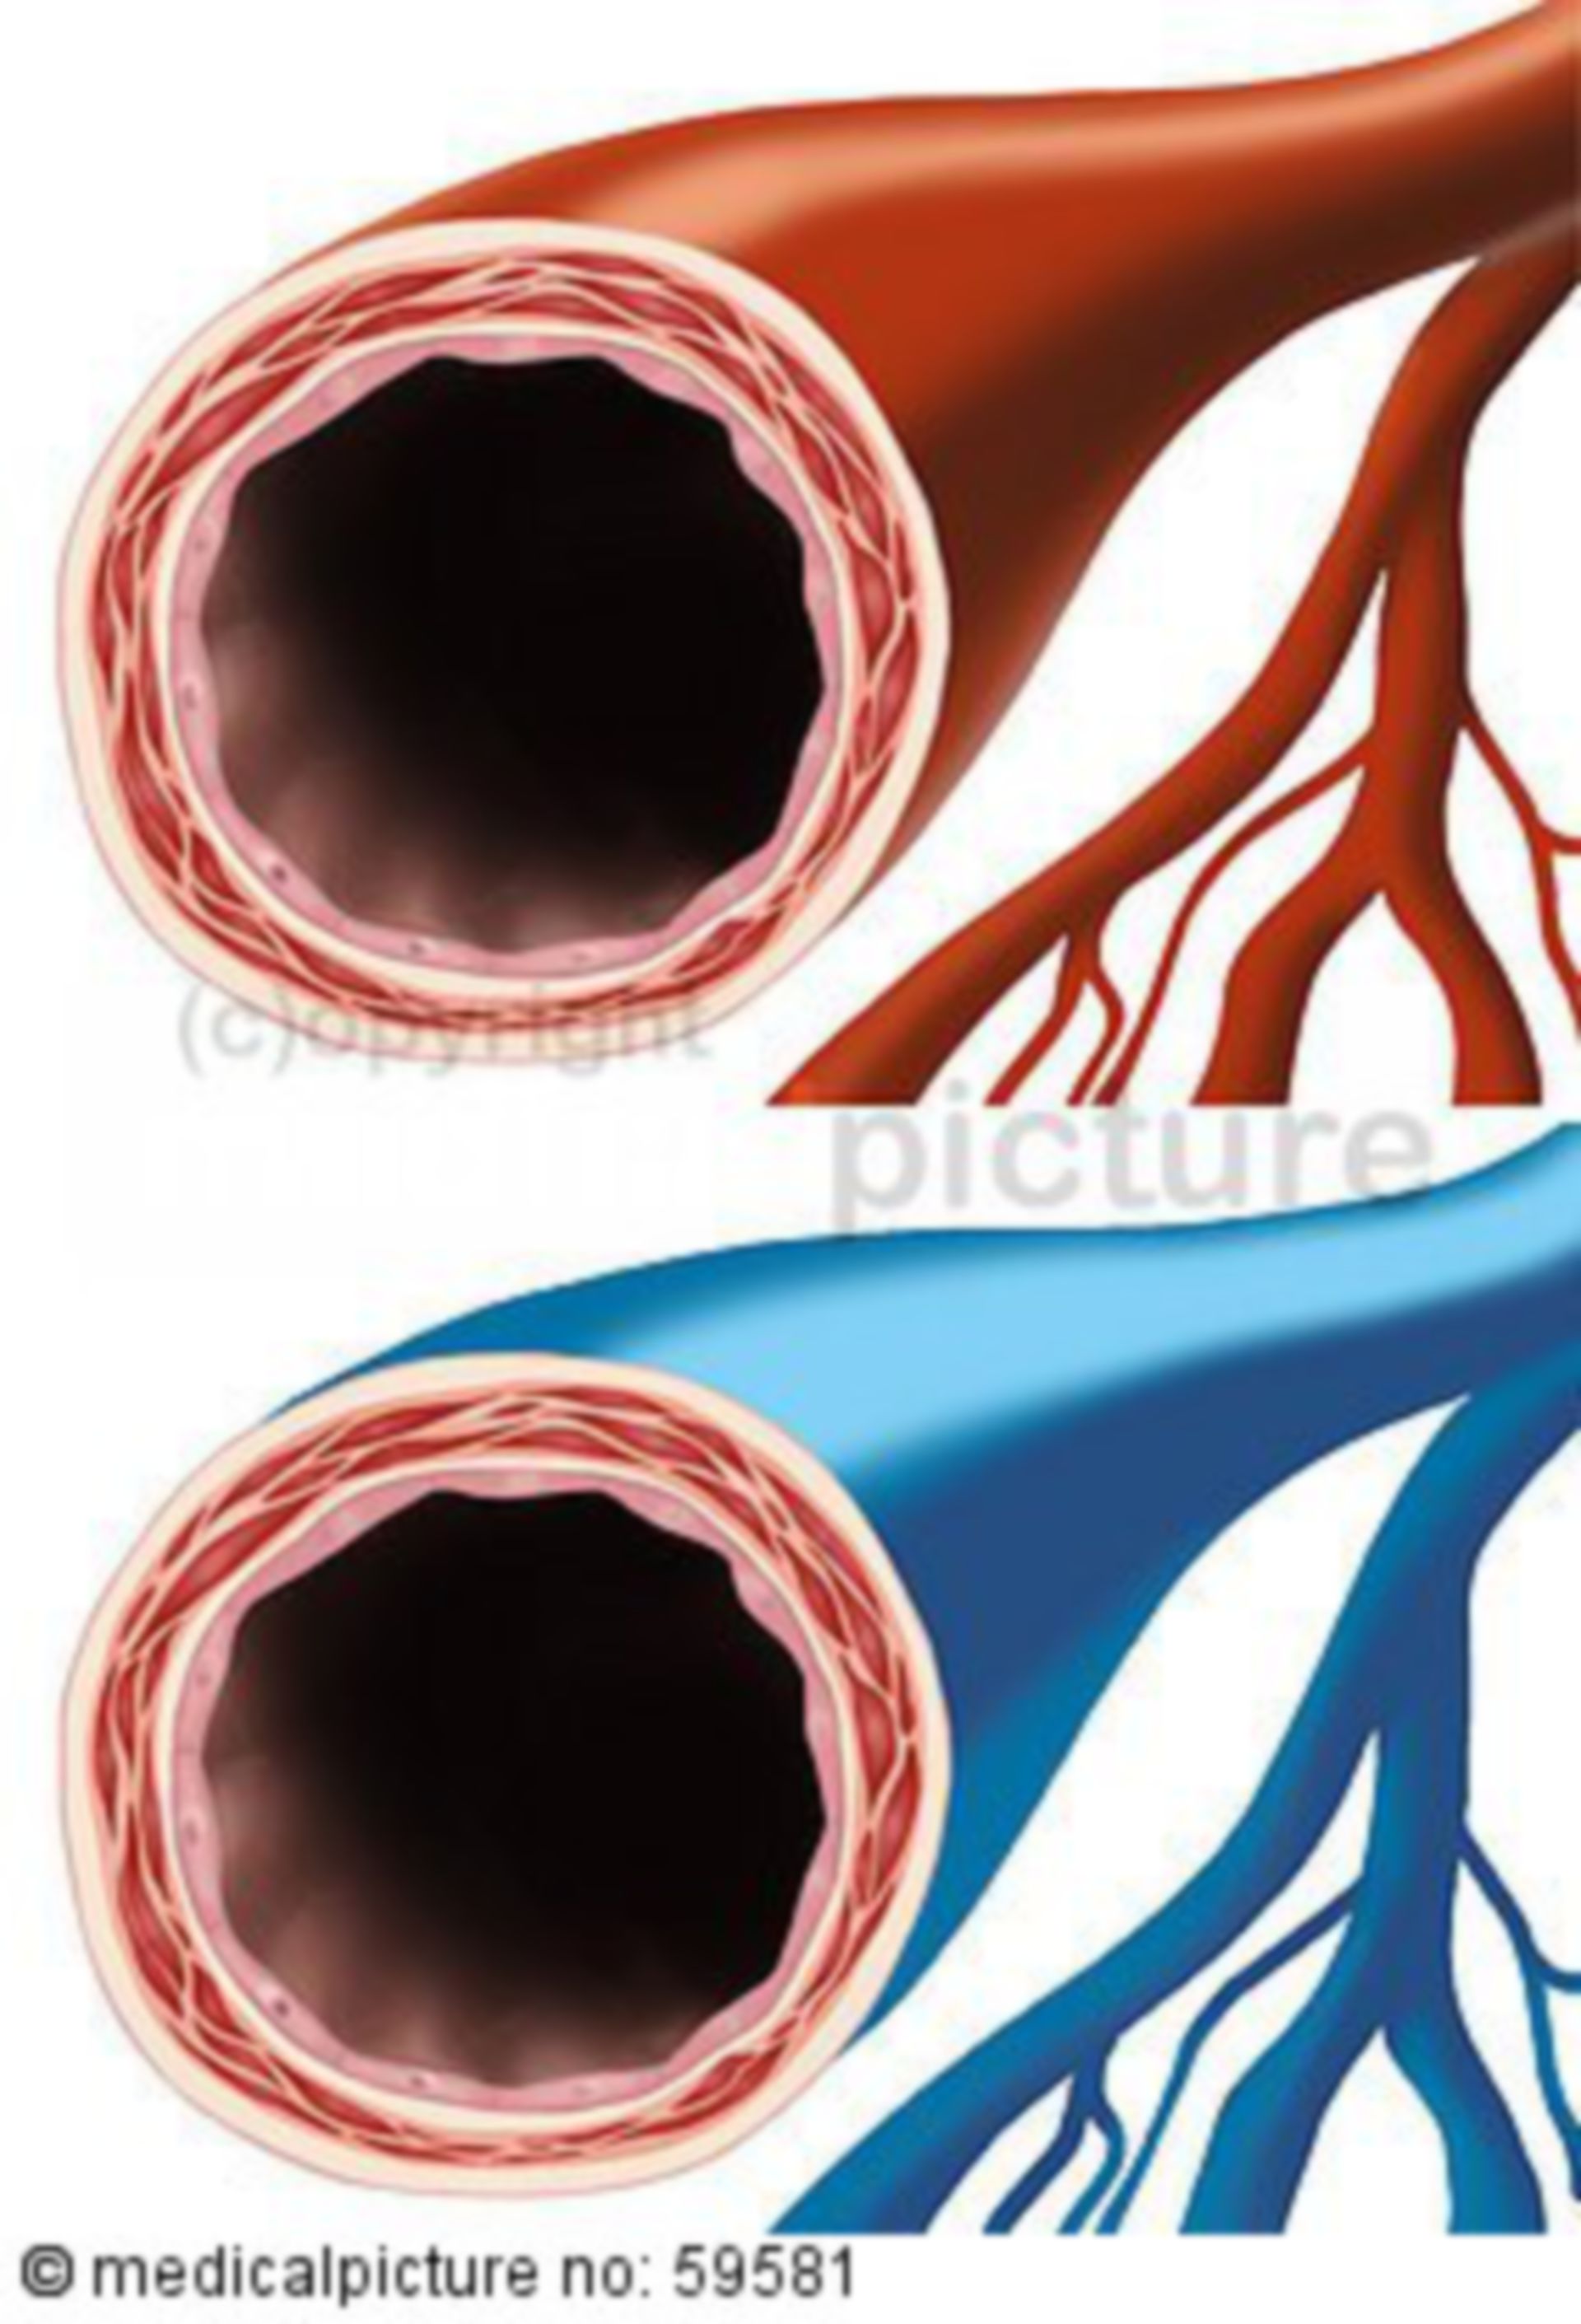 Artery and vein